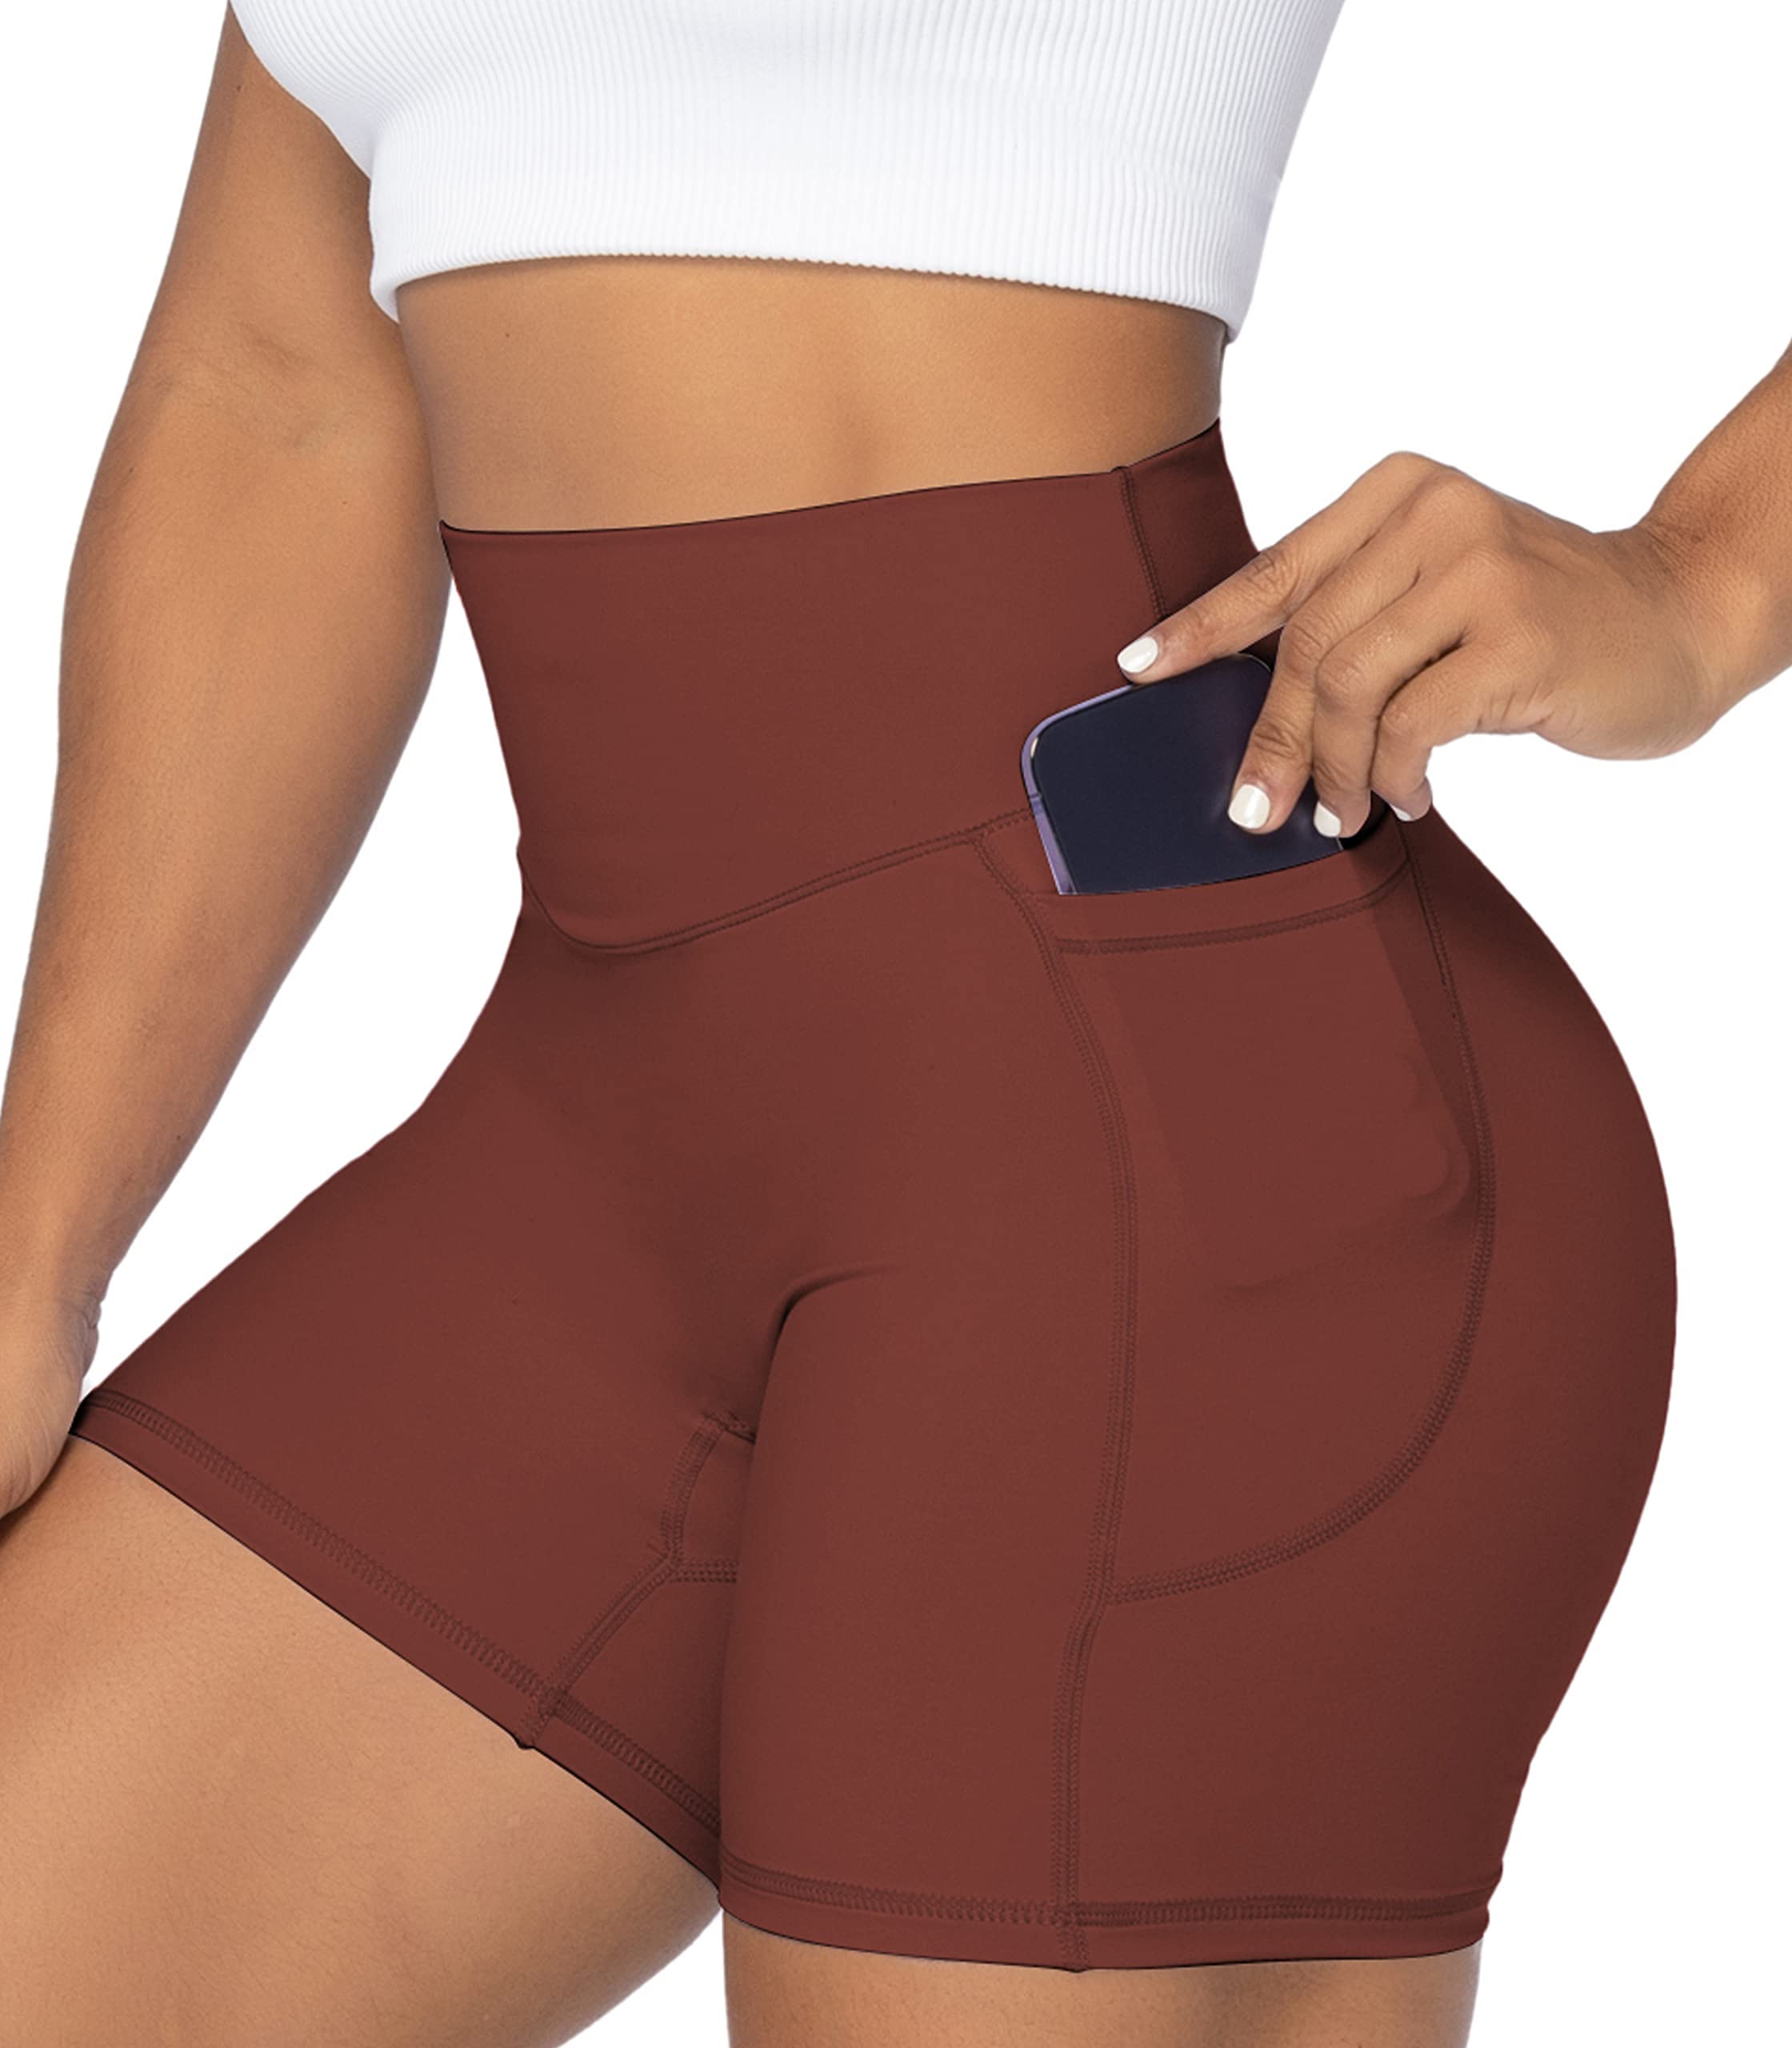 Buy Sunzel Women's Biker Shorts in High Waist Tummy Control with